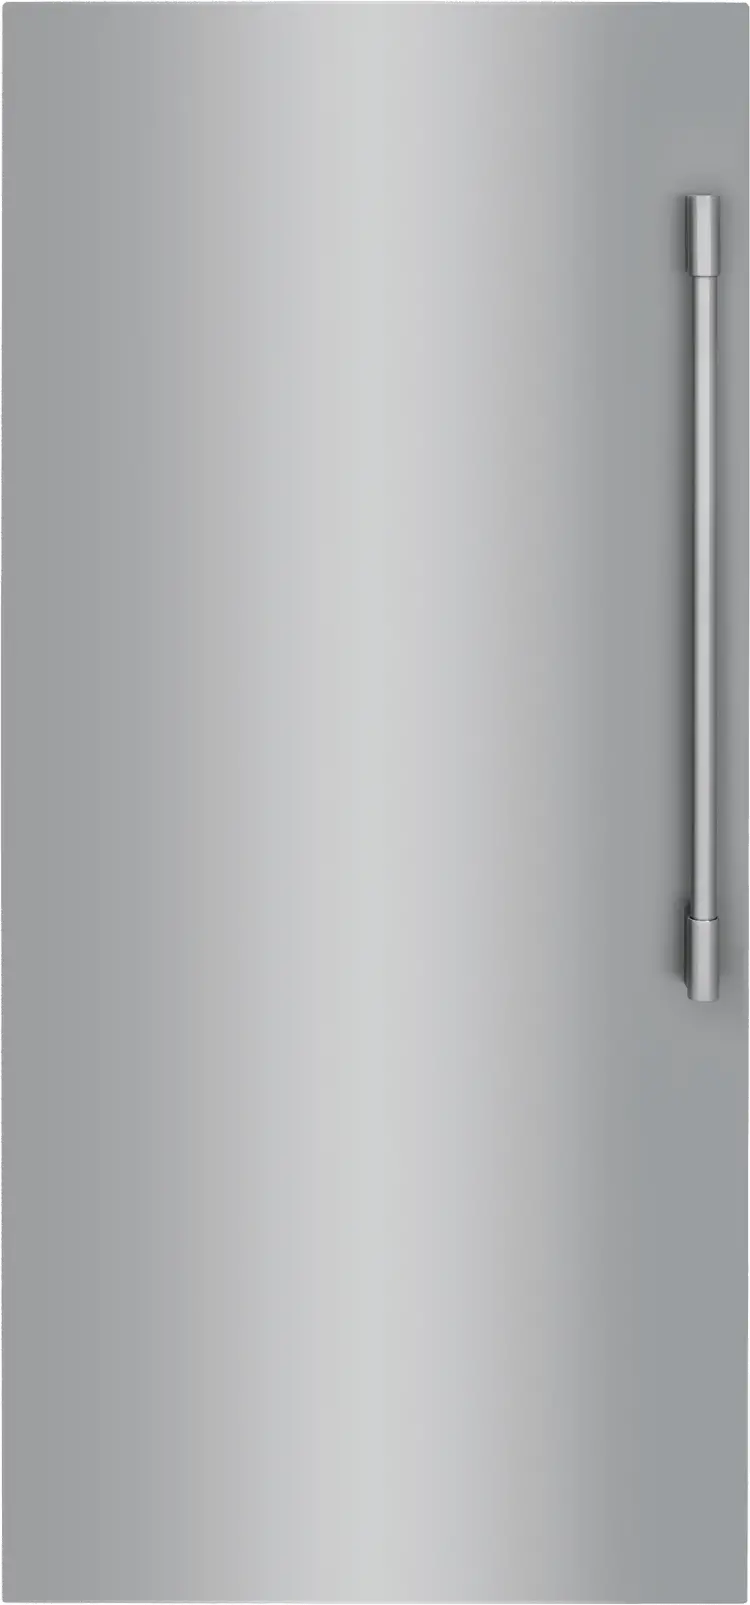 Stainless steel Frigidaire upright freezer